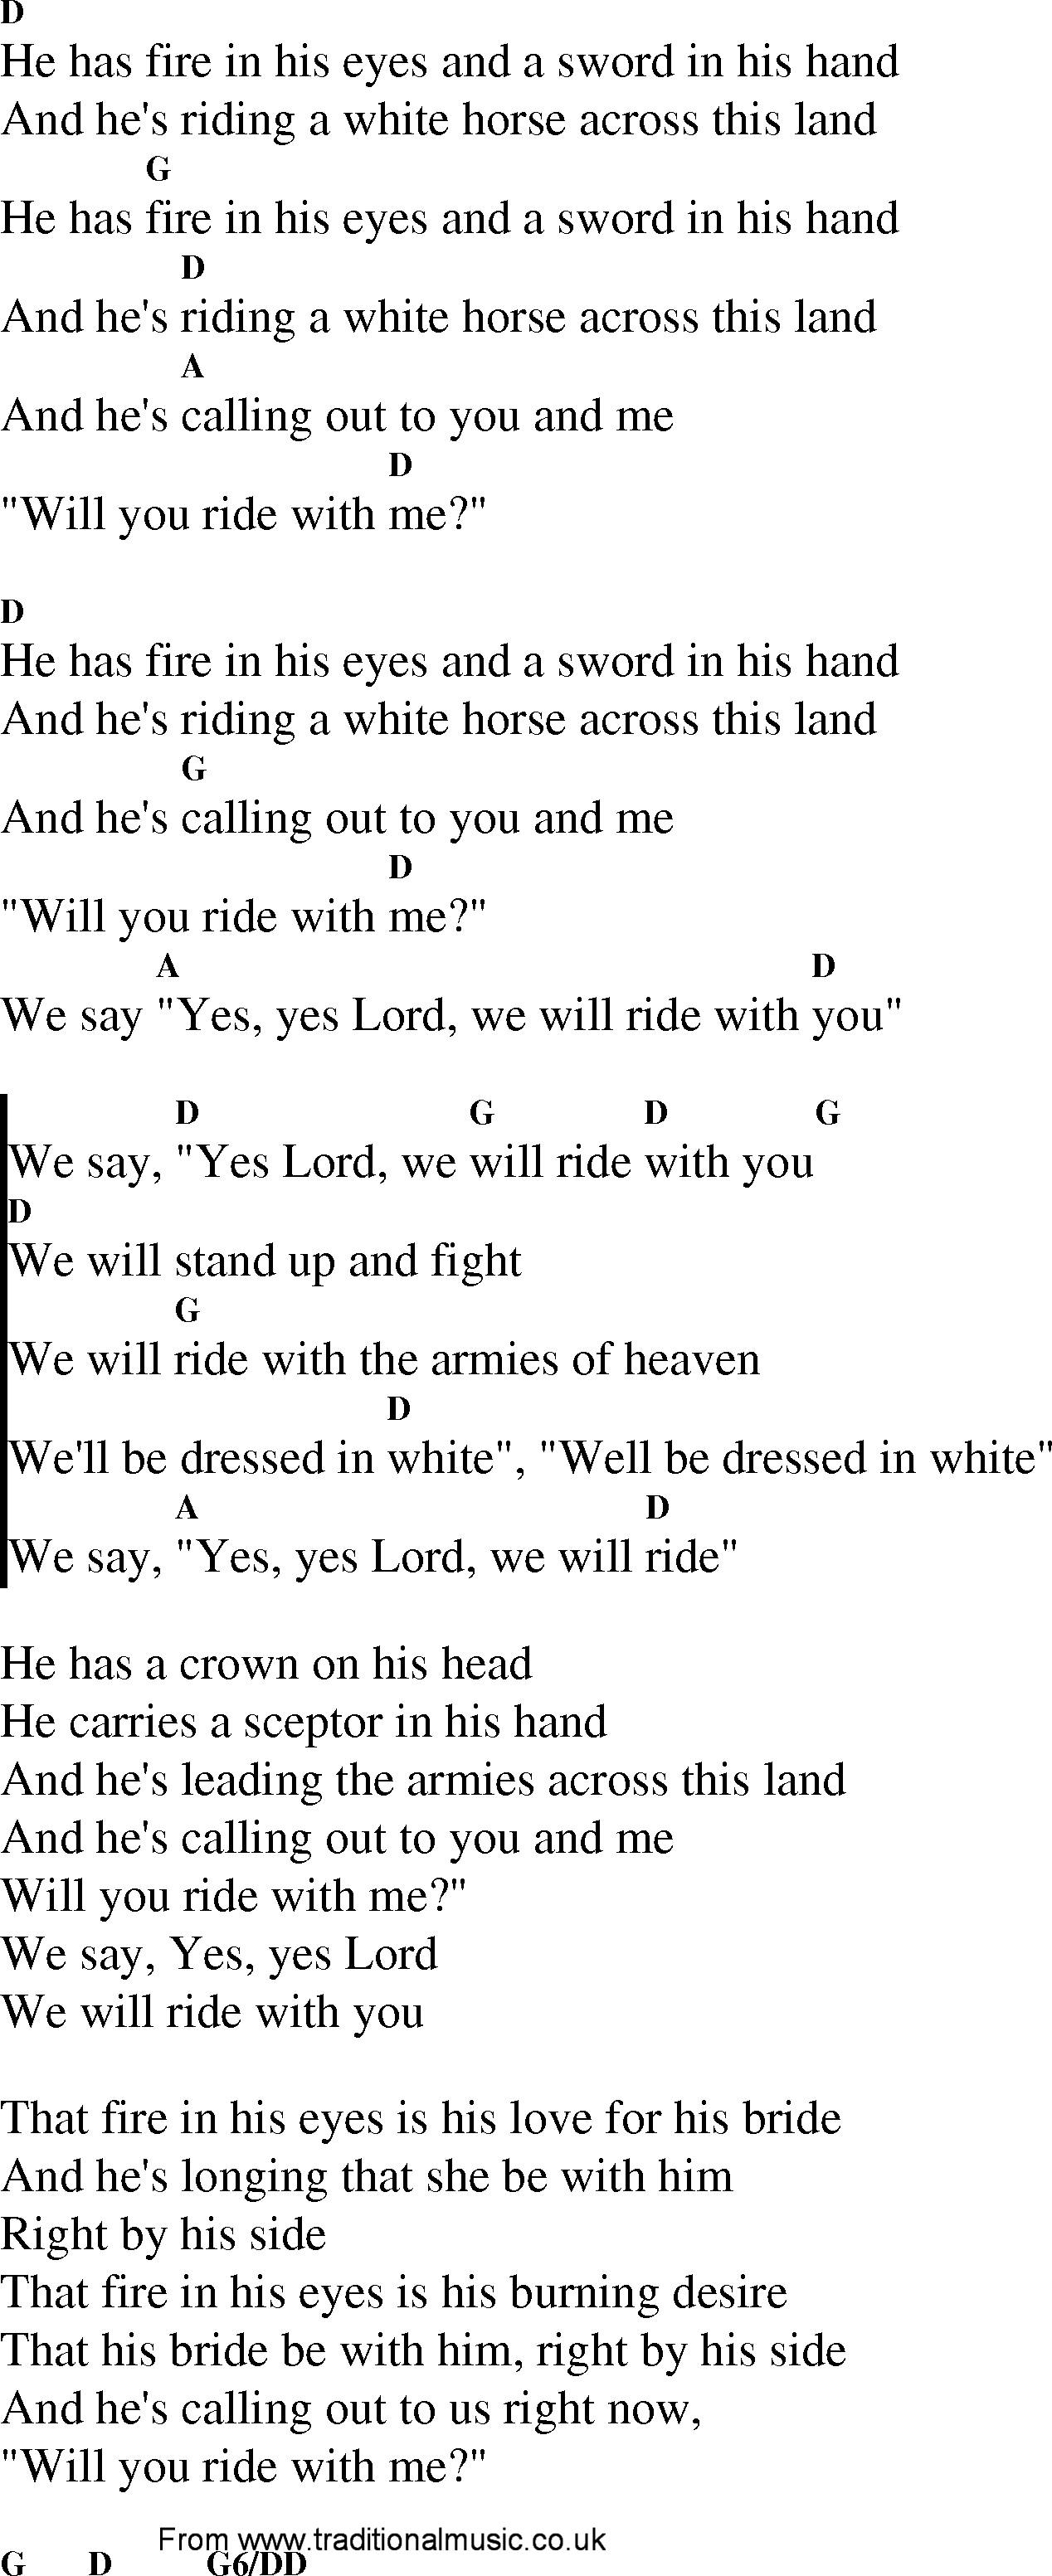 Gospel Song: we_will_ride, lyrics and chords.